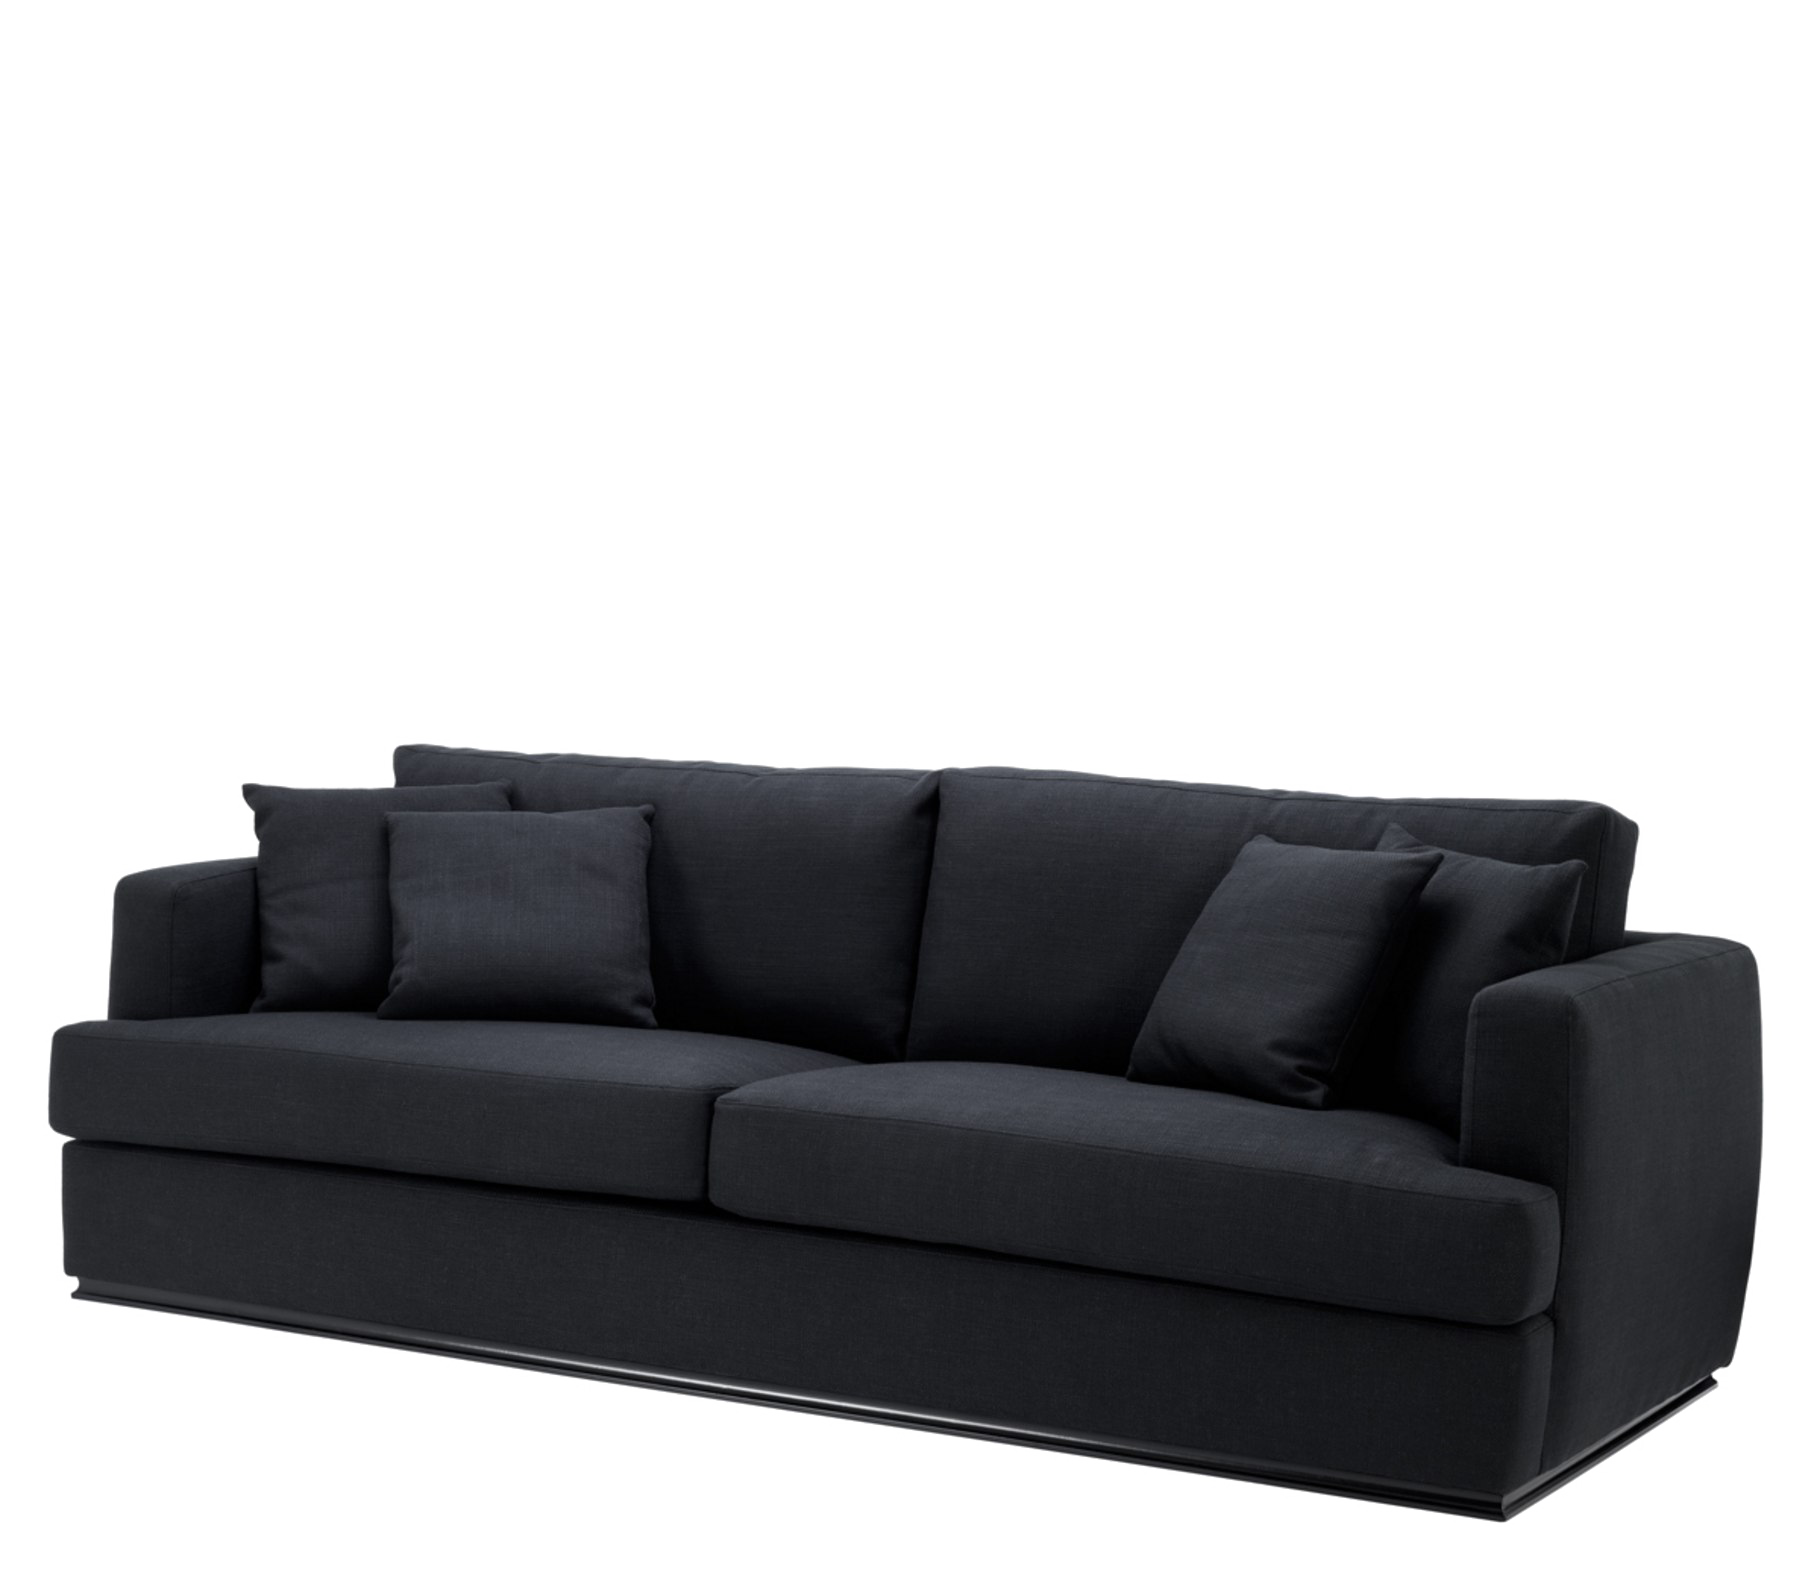 Black Sofa PNG Image High Quality PNG Image